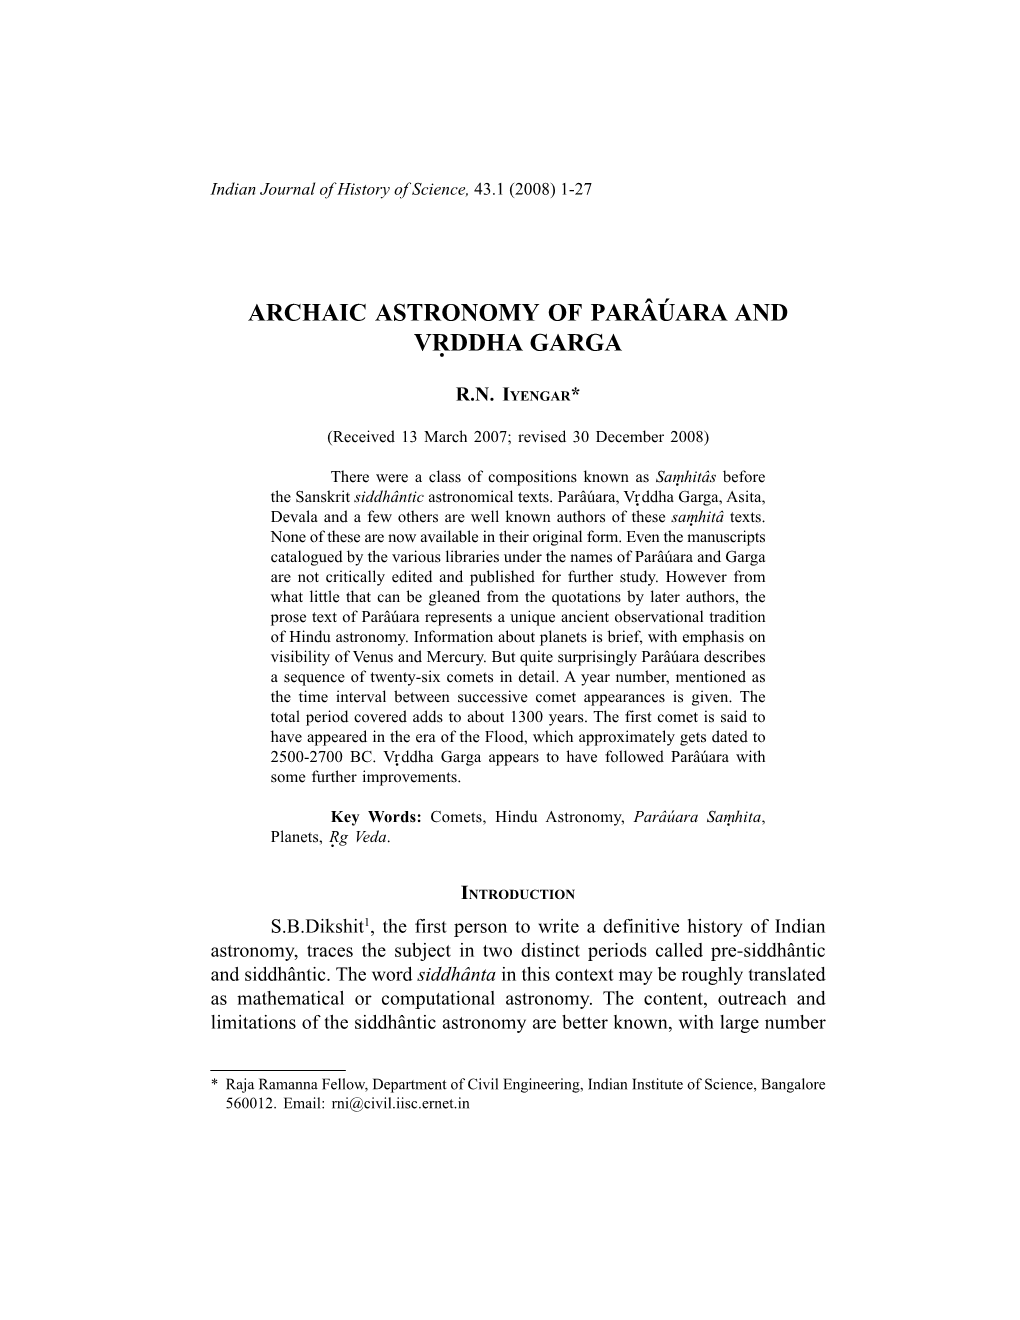 Archaic Astronomy of Parāśara and Vr.Ddha Garga